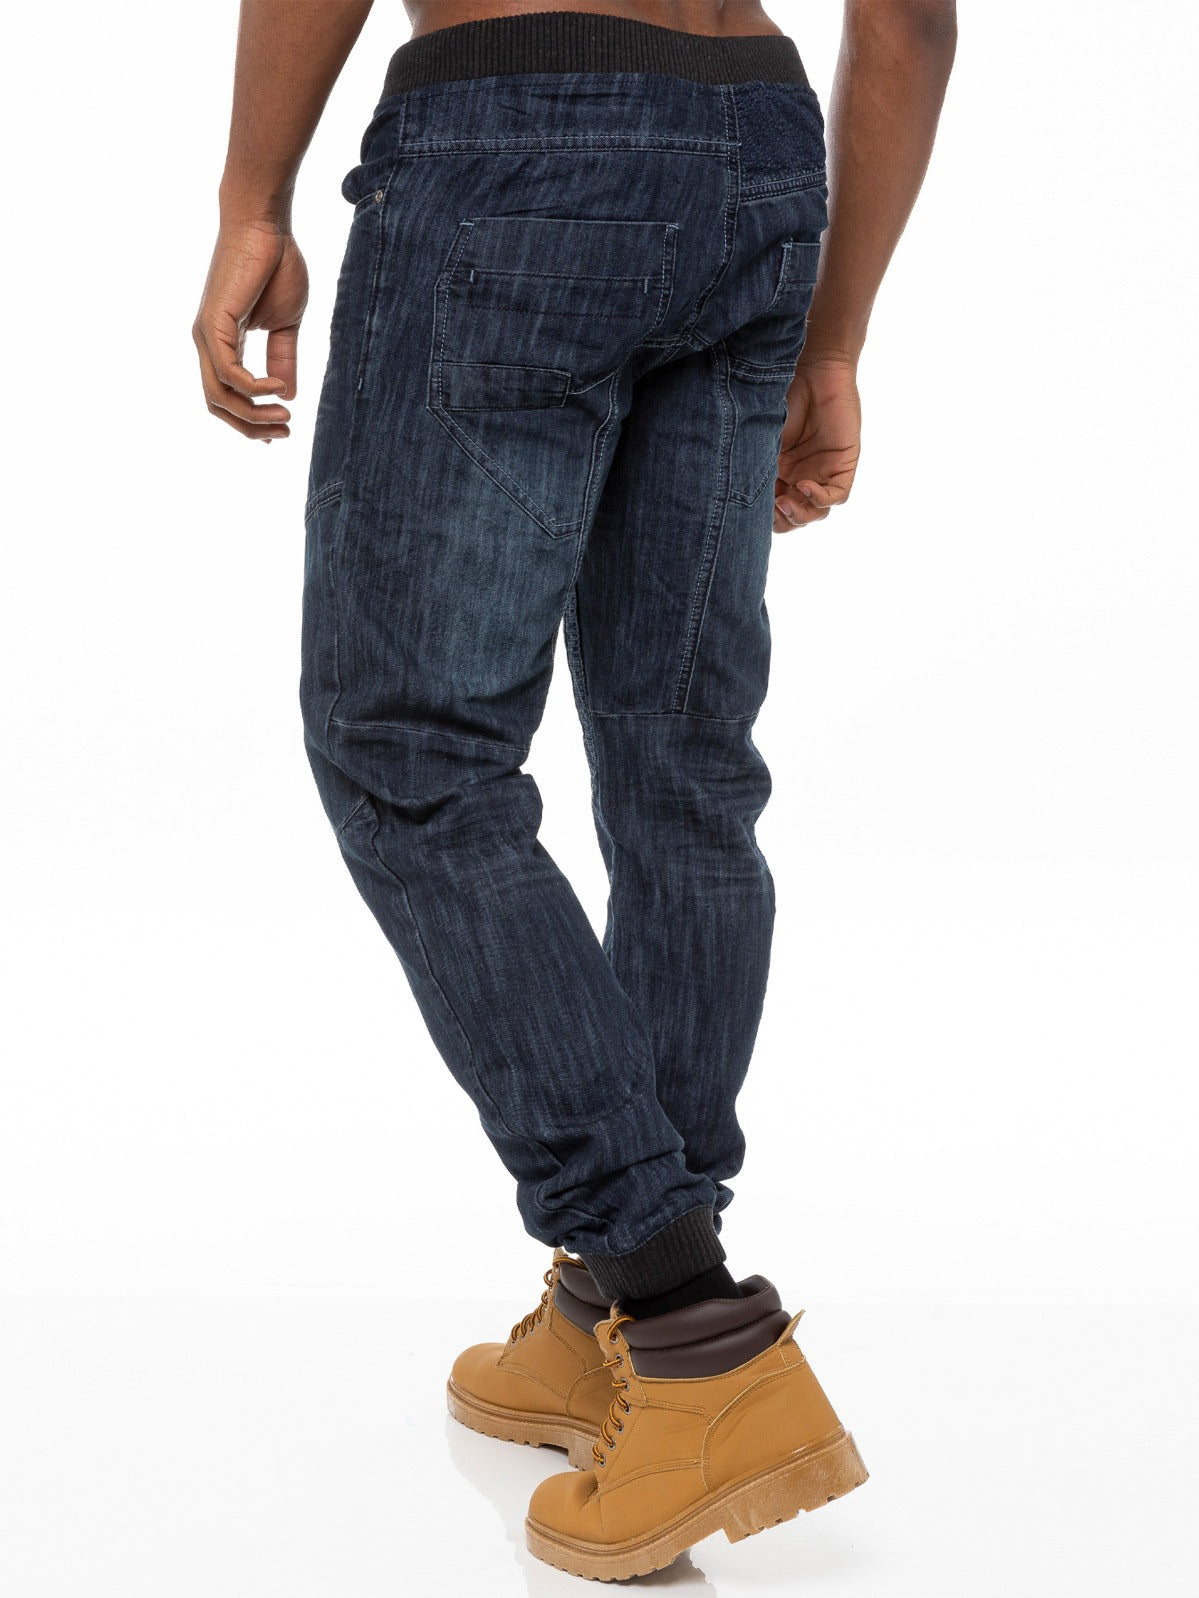 KRUZE Mens Designer Casual Branded Denim Cuffed Jeans Pants